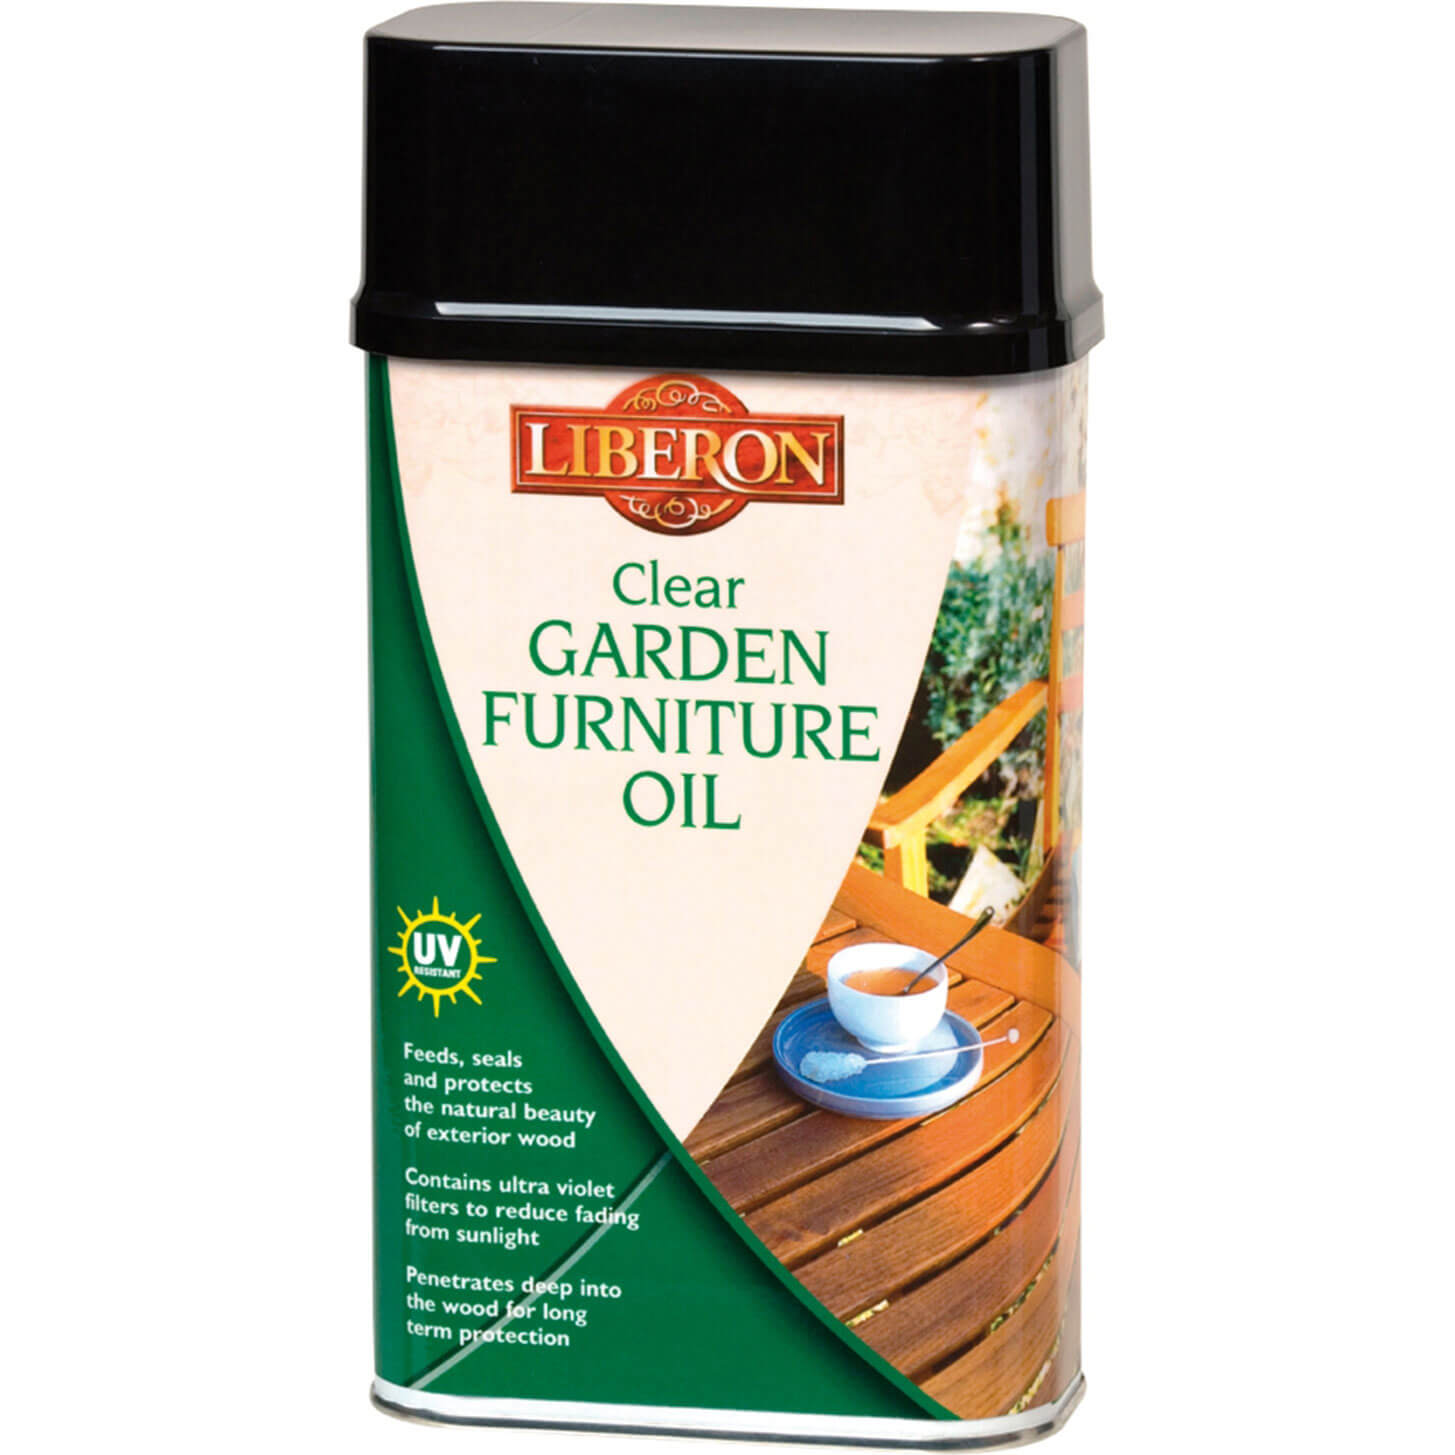 Image of Liberon Garden Furniture Oil Clear 1l